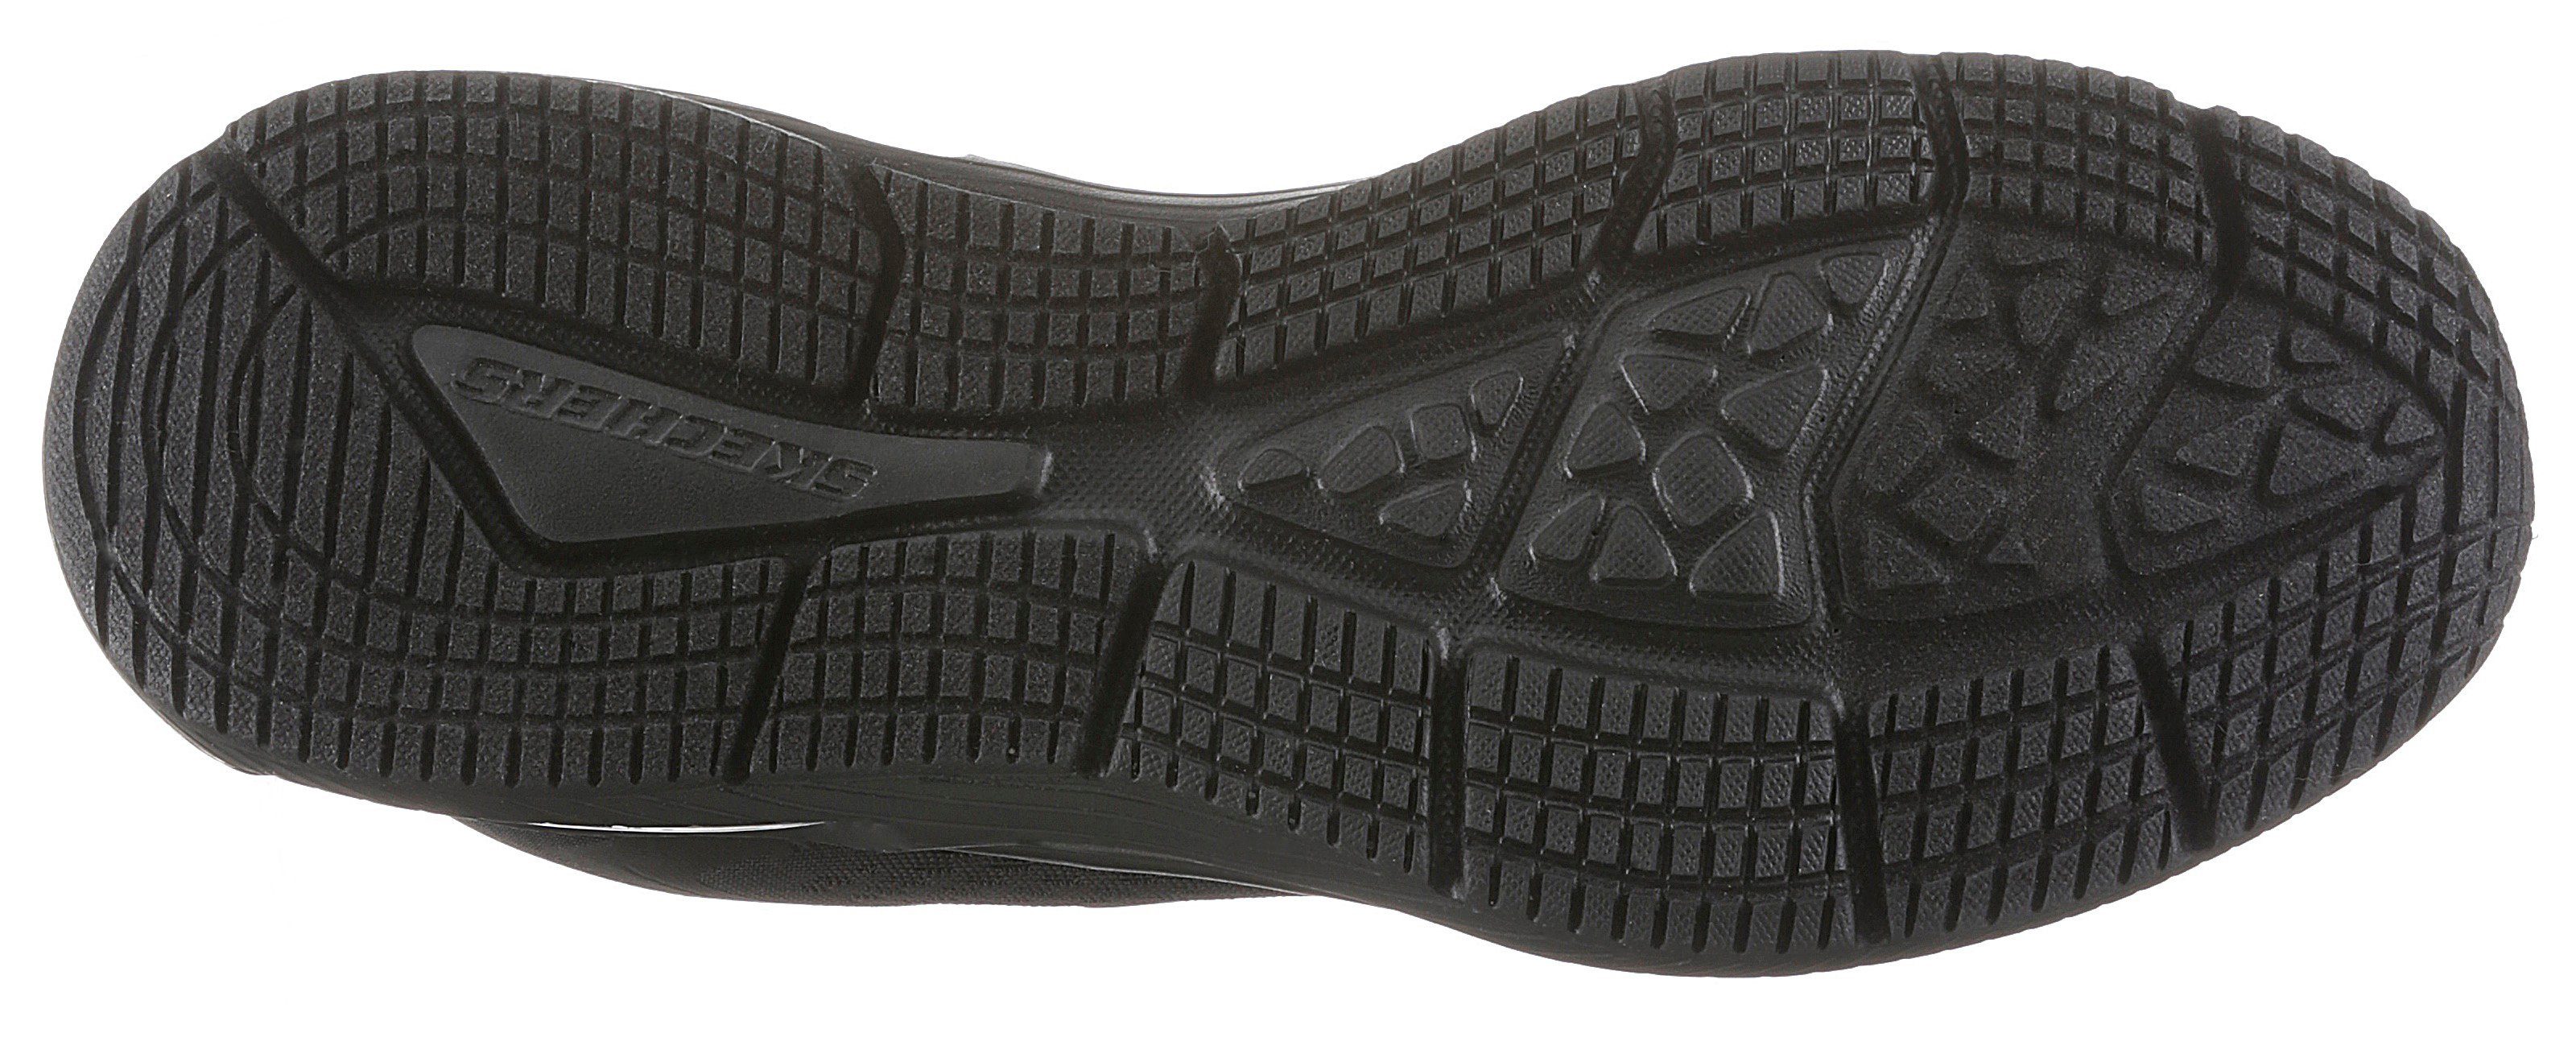 Skechers Dyna Air mit Sneaker Foam Air-Cooled schwarz Memory